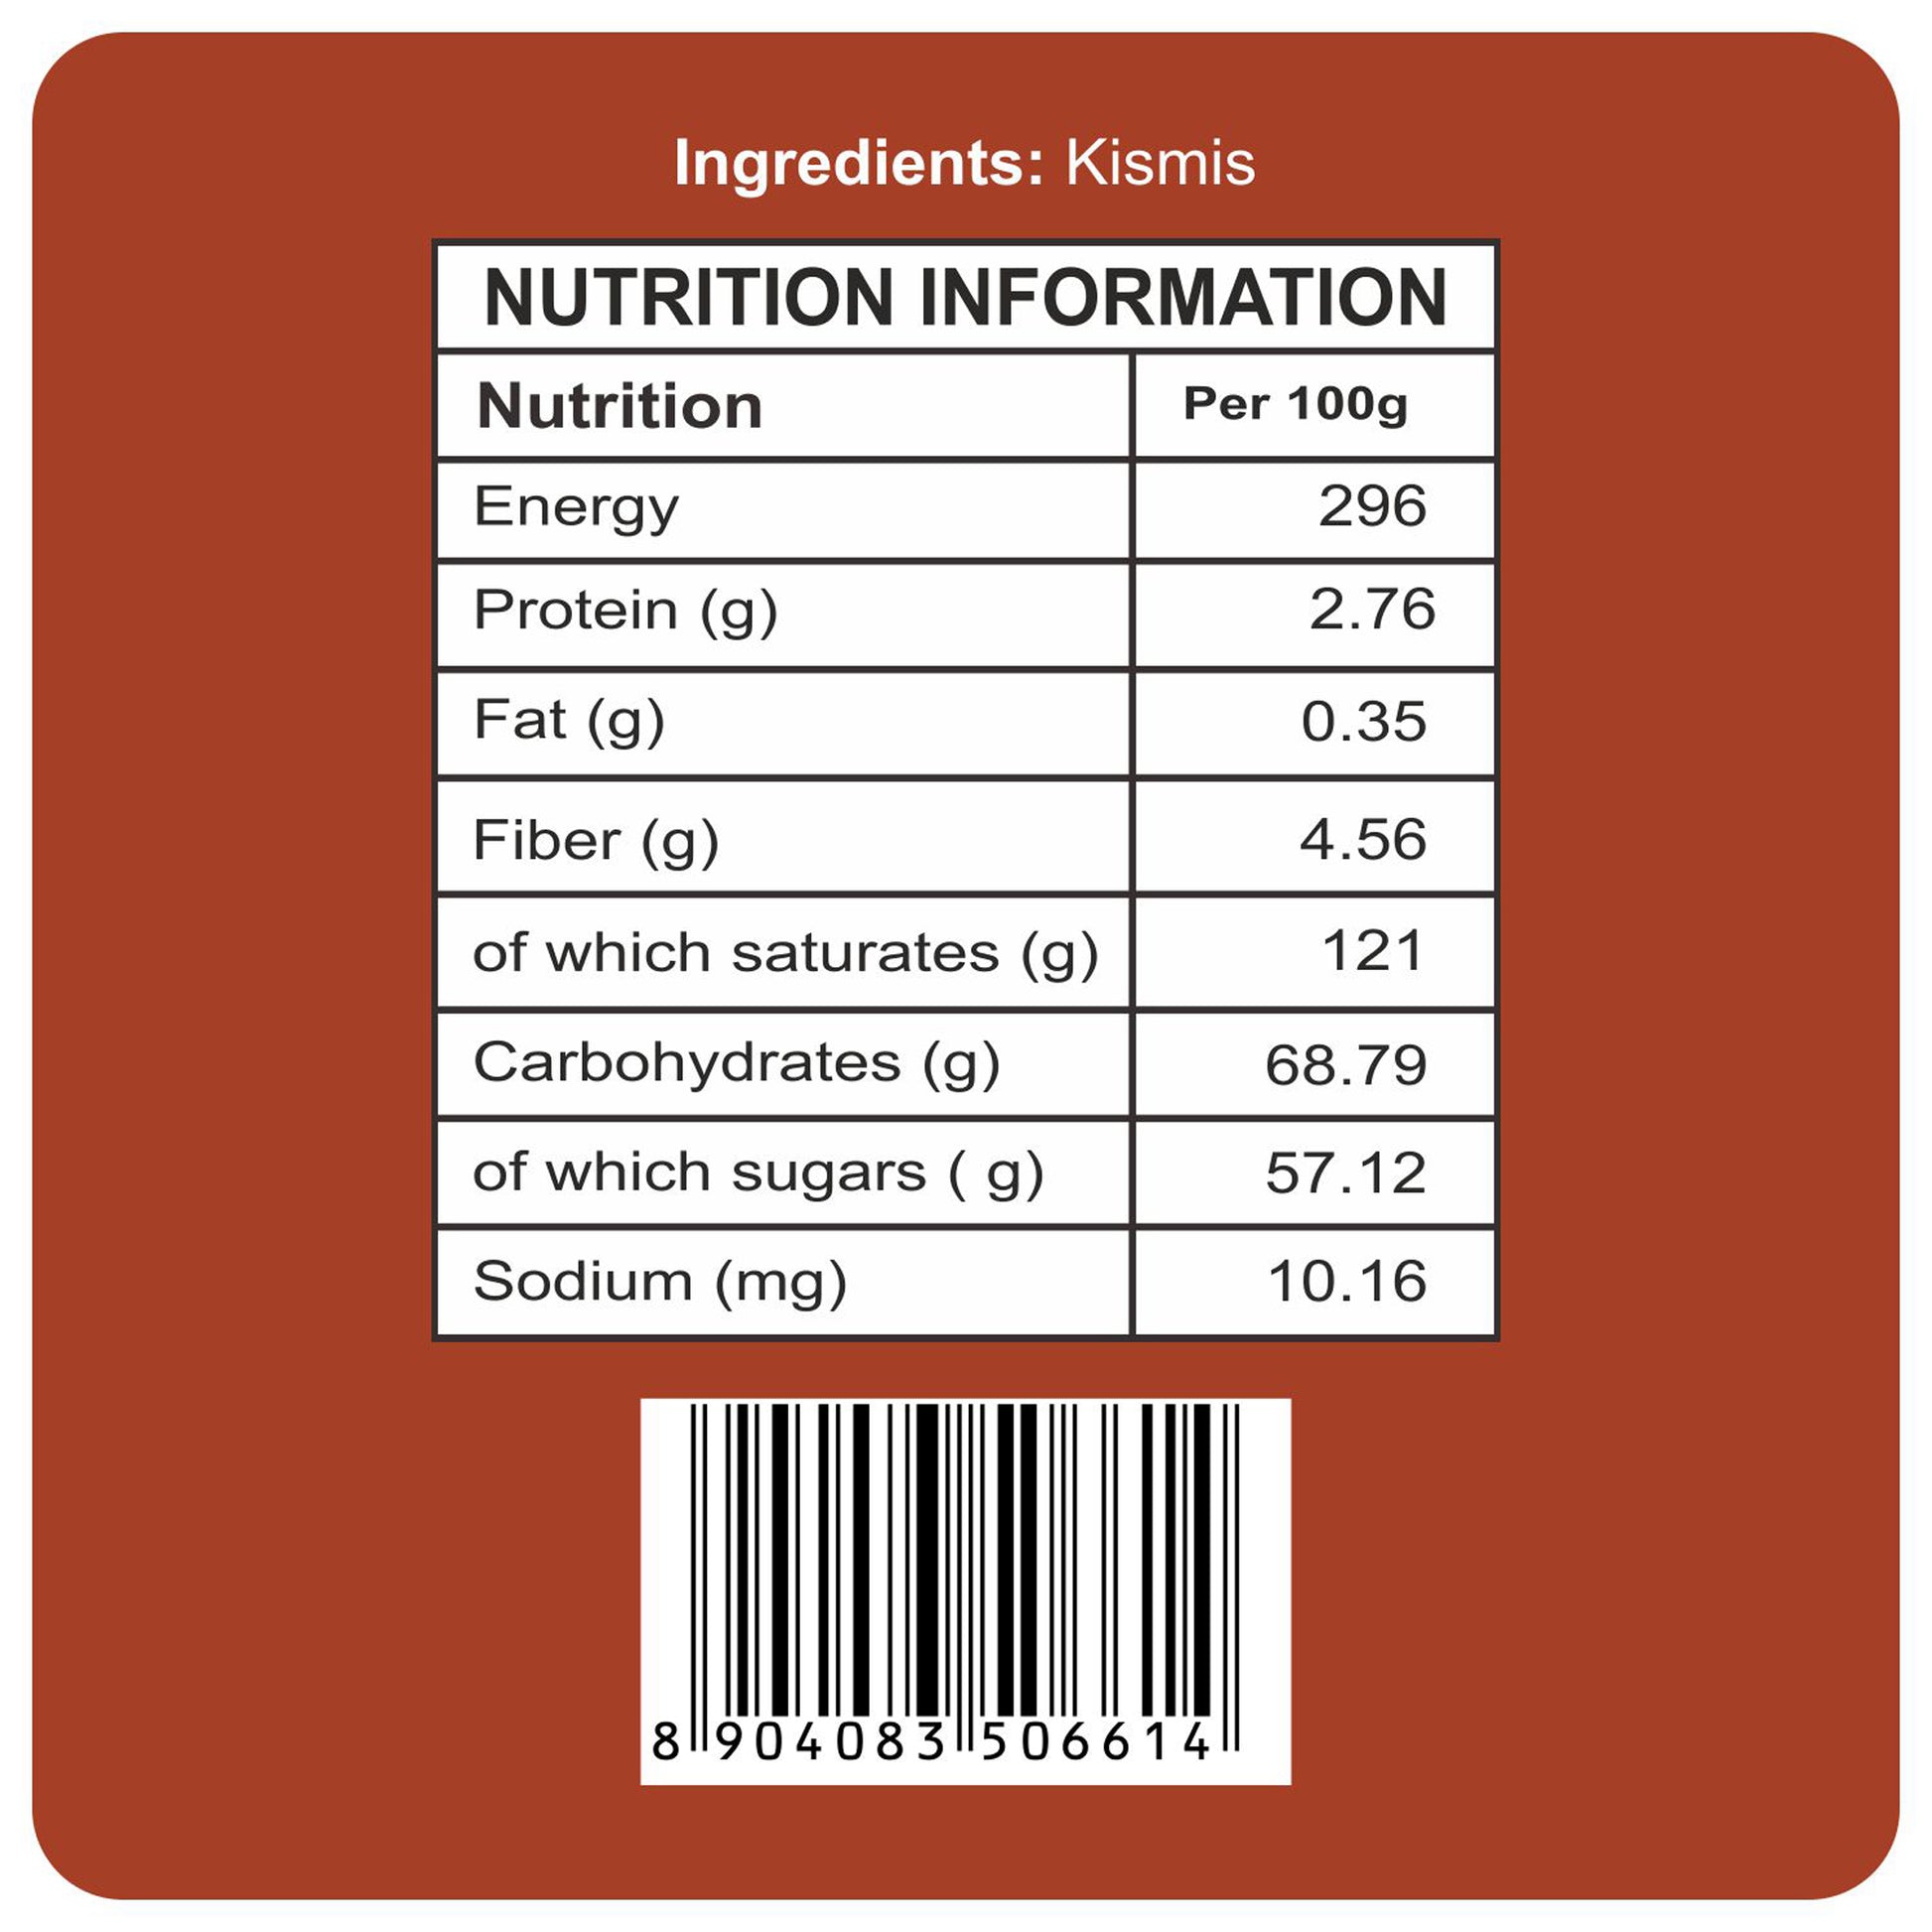 Nutrition detailing - Kismis